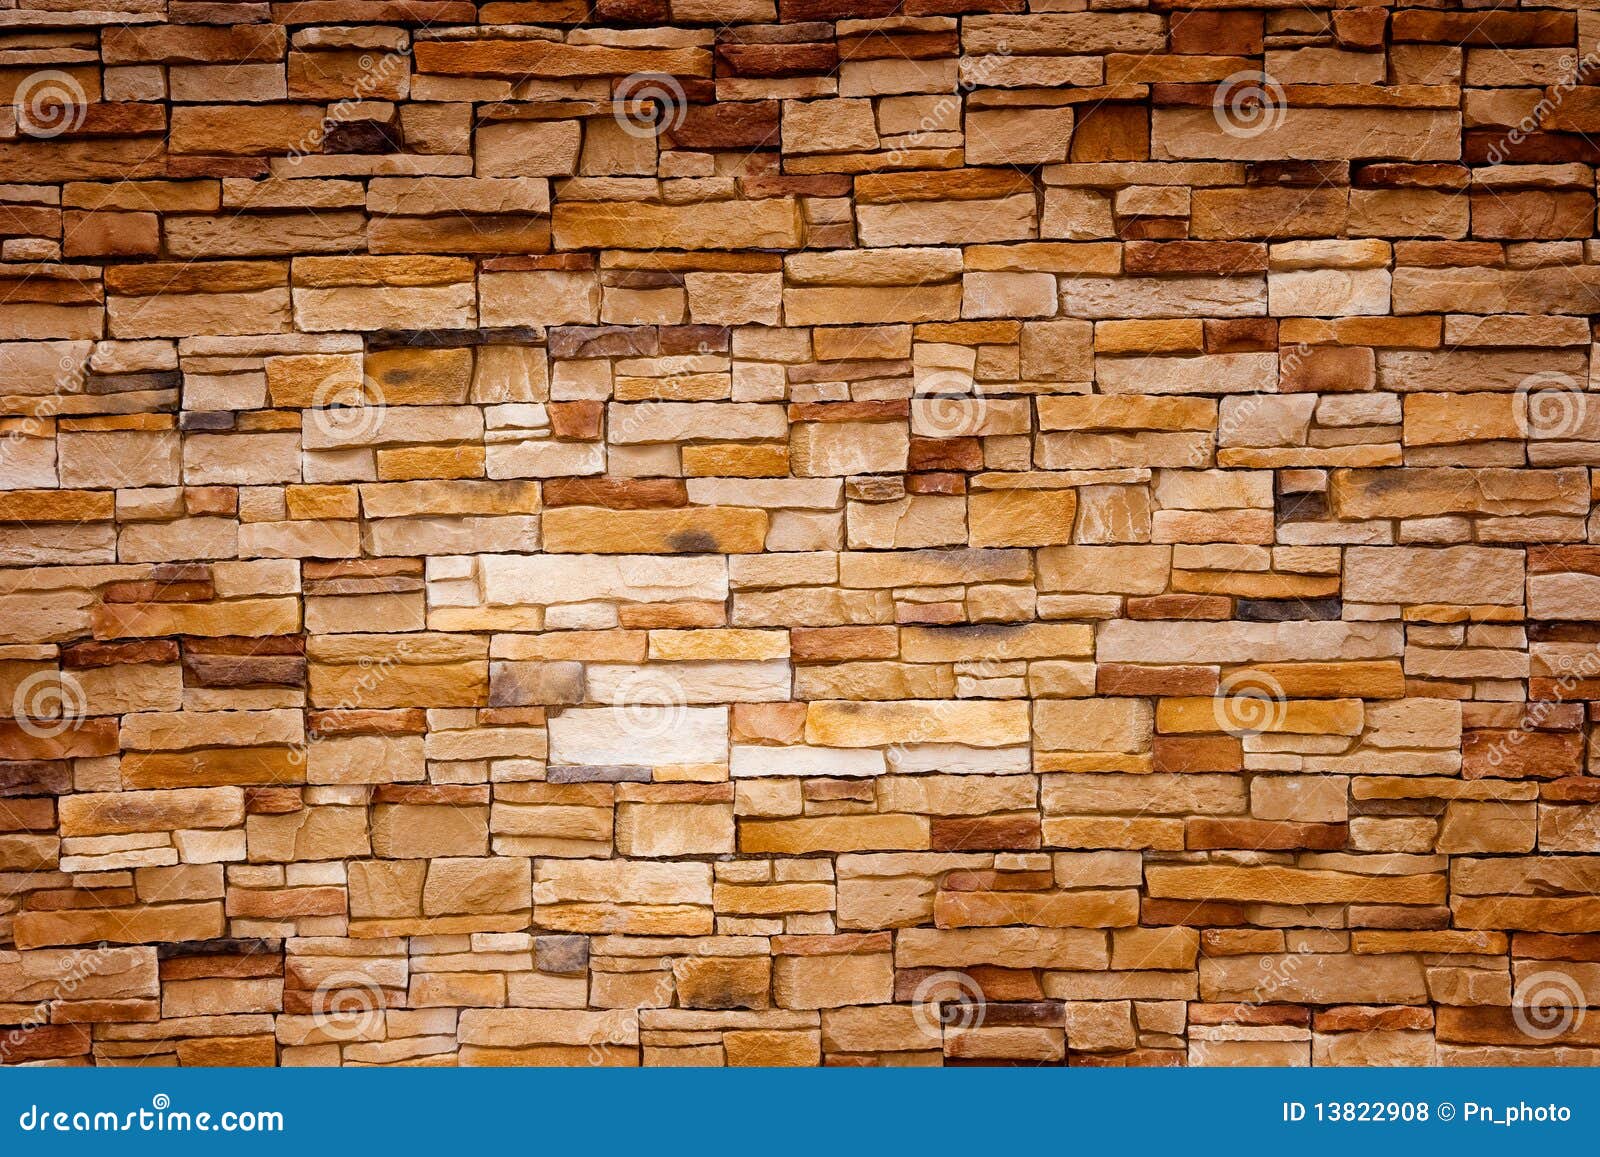 handcraft brick wall